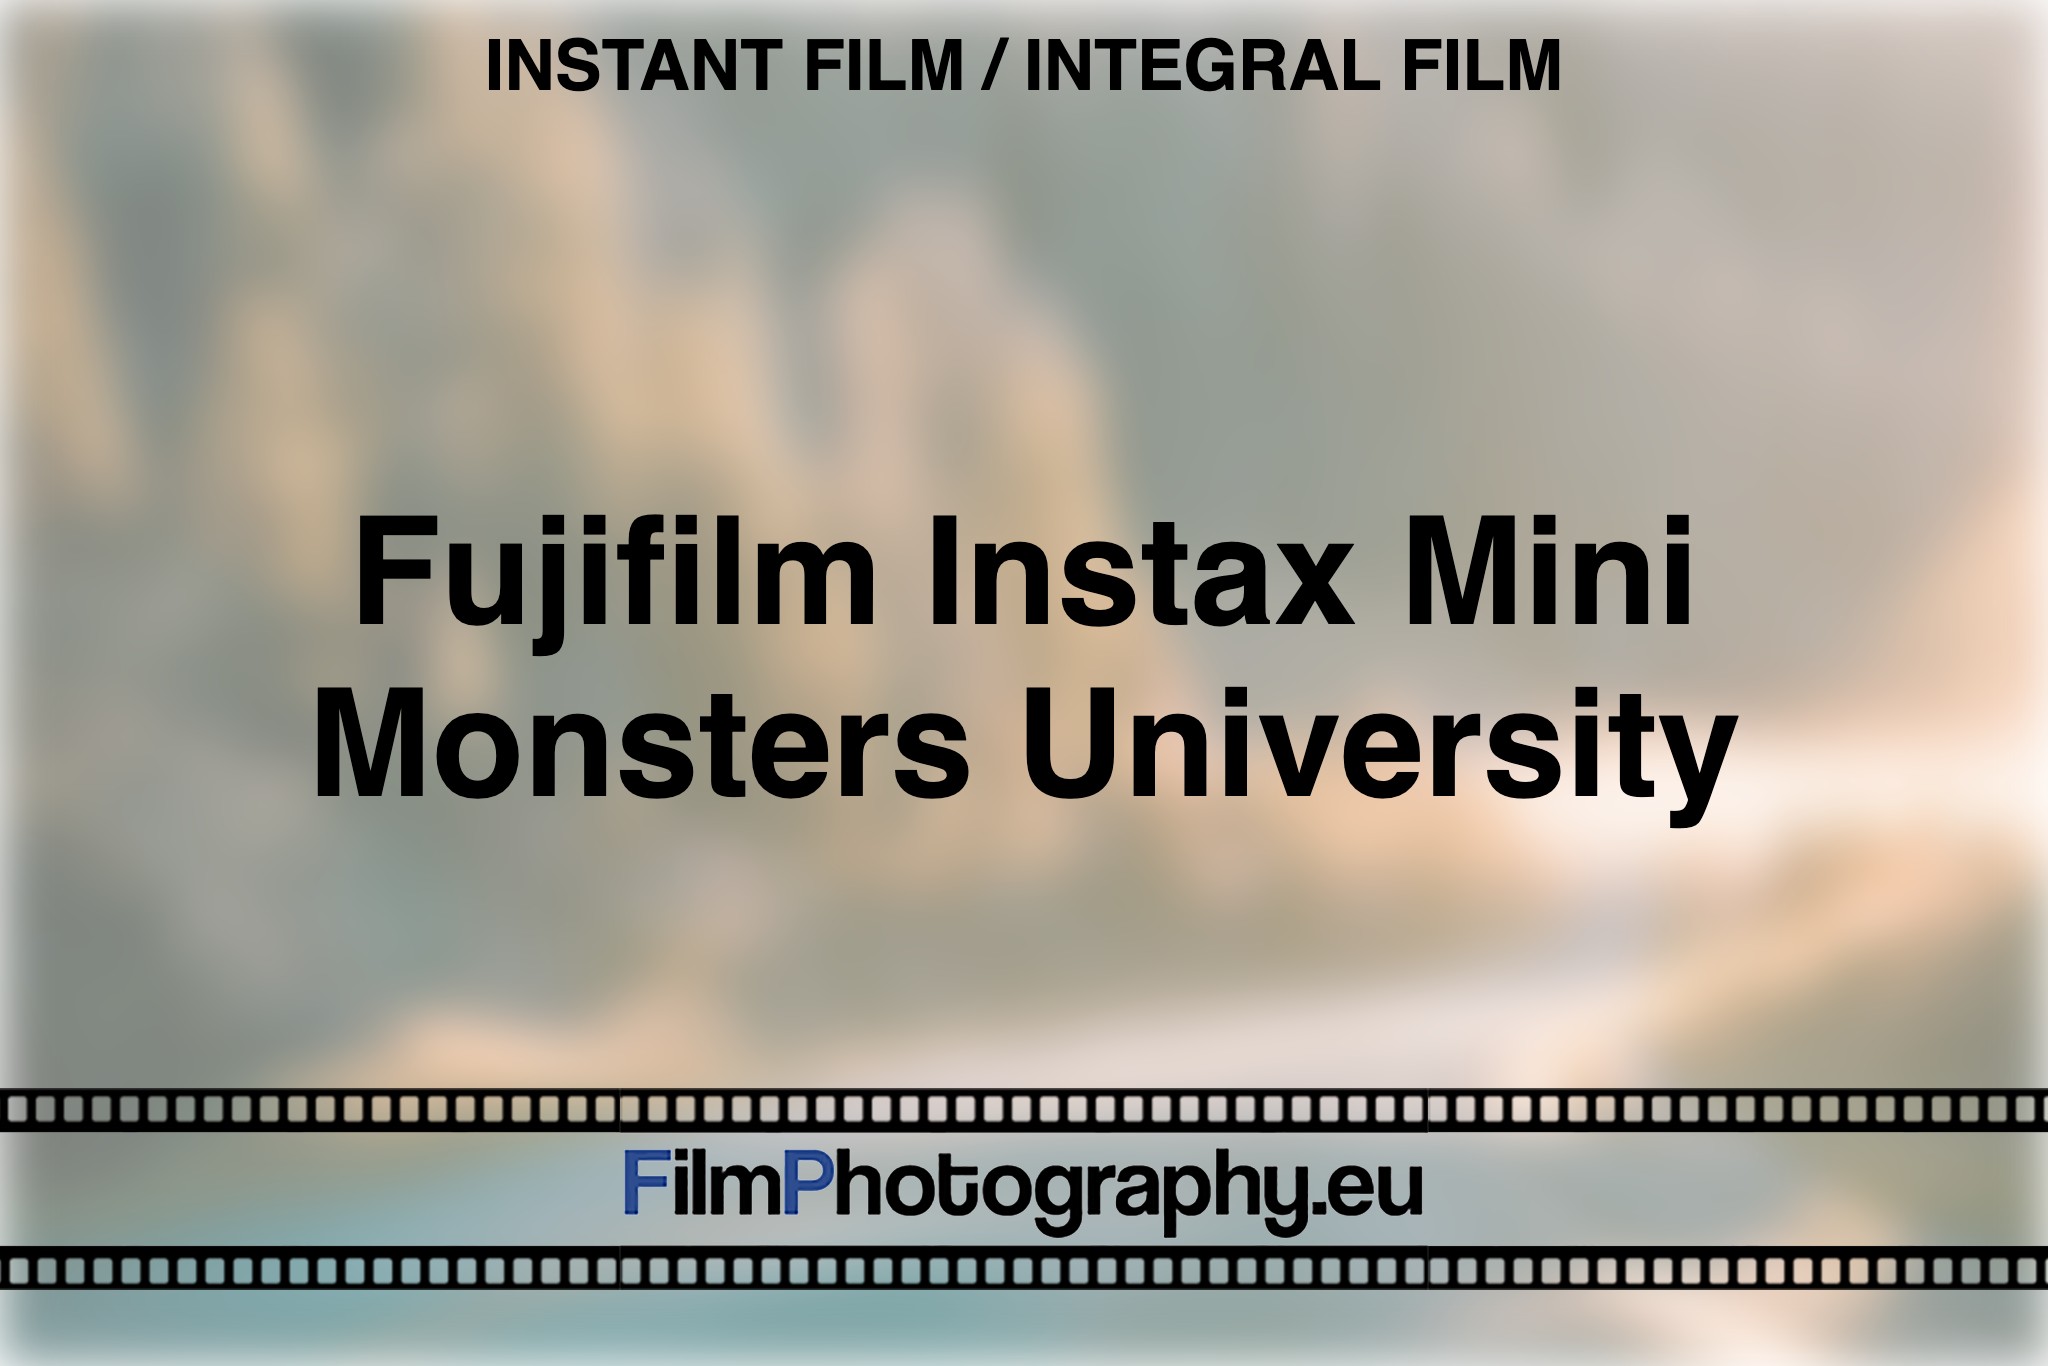 fujifilm-instax-mini-monsters-university-instant-film-integral-film-bnv